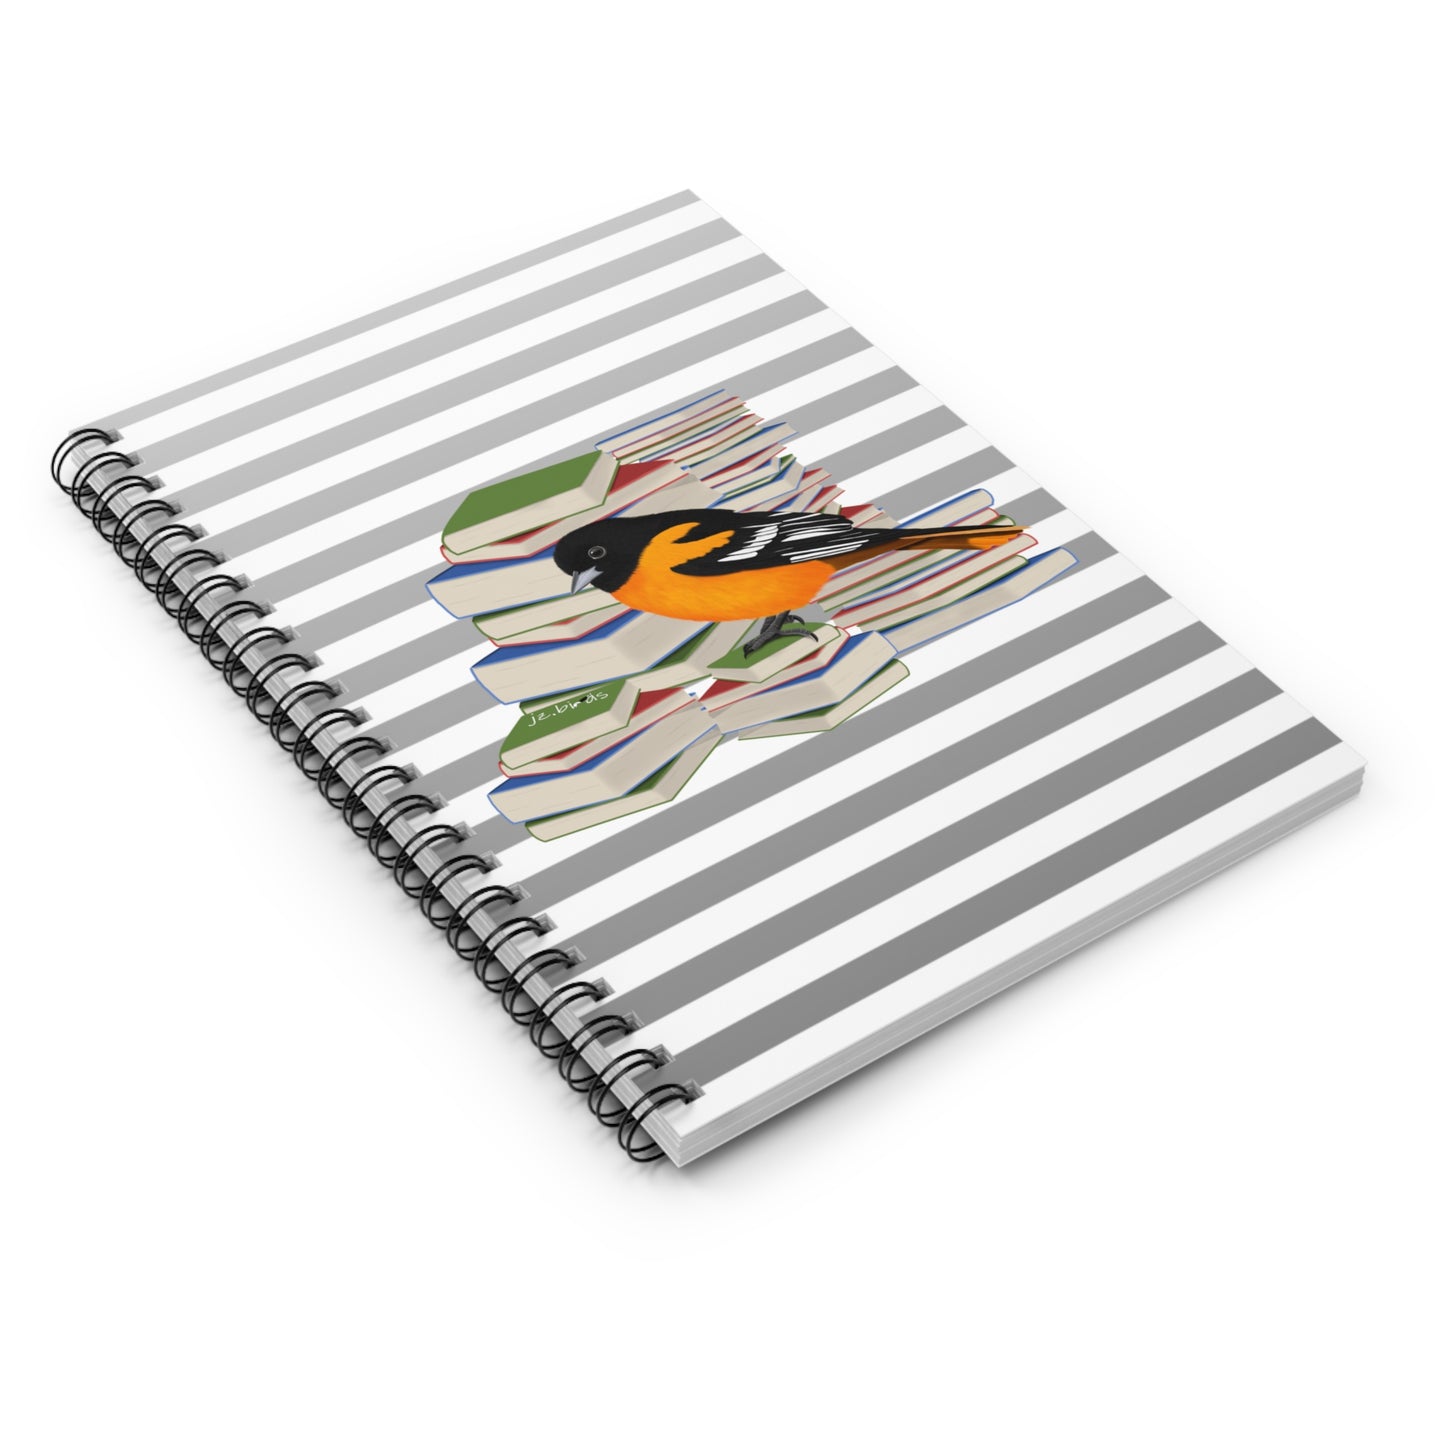 Baltimore Oriole Bird with Books Birdlover Bookworm Spiral Notebook Ruled Line 6" x 8"